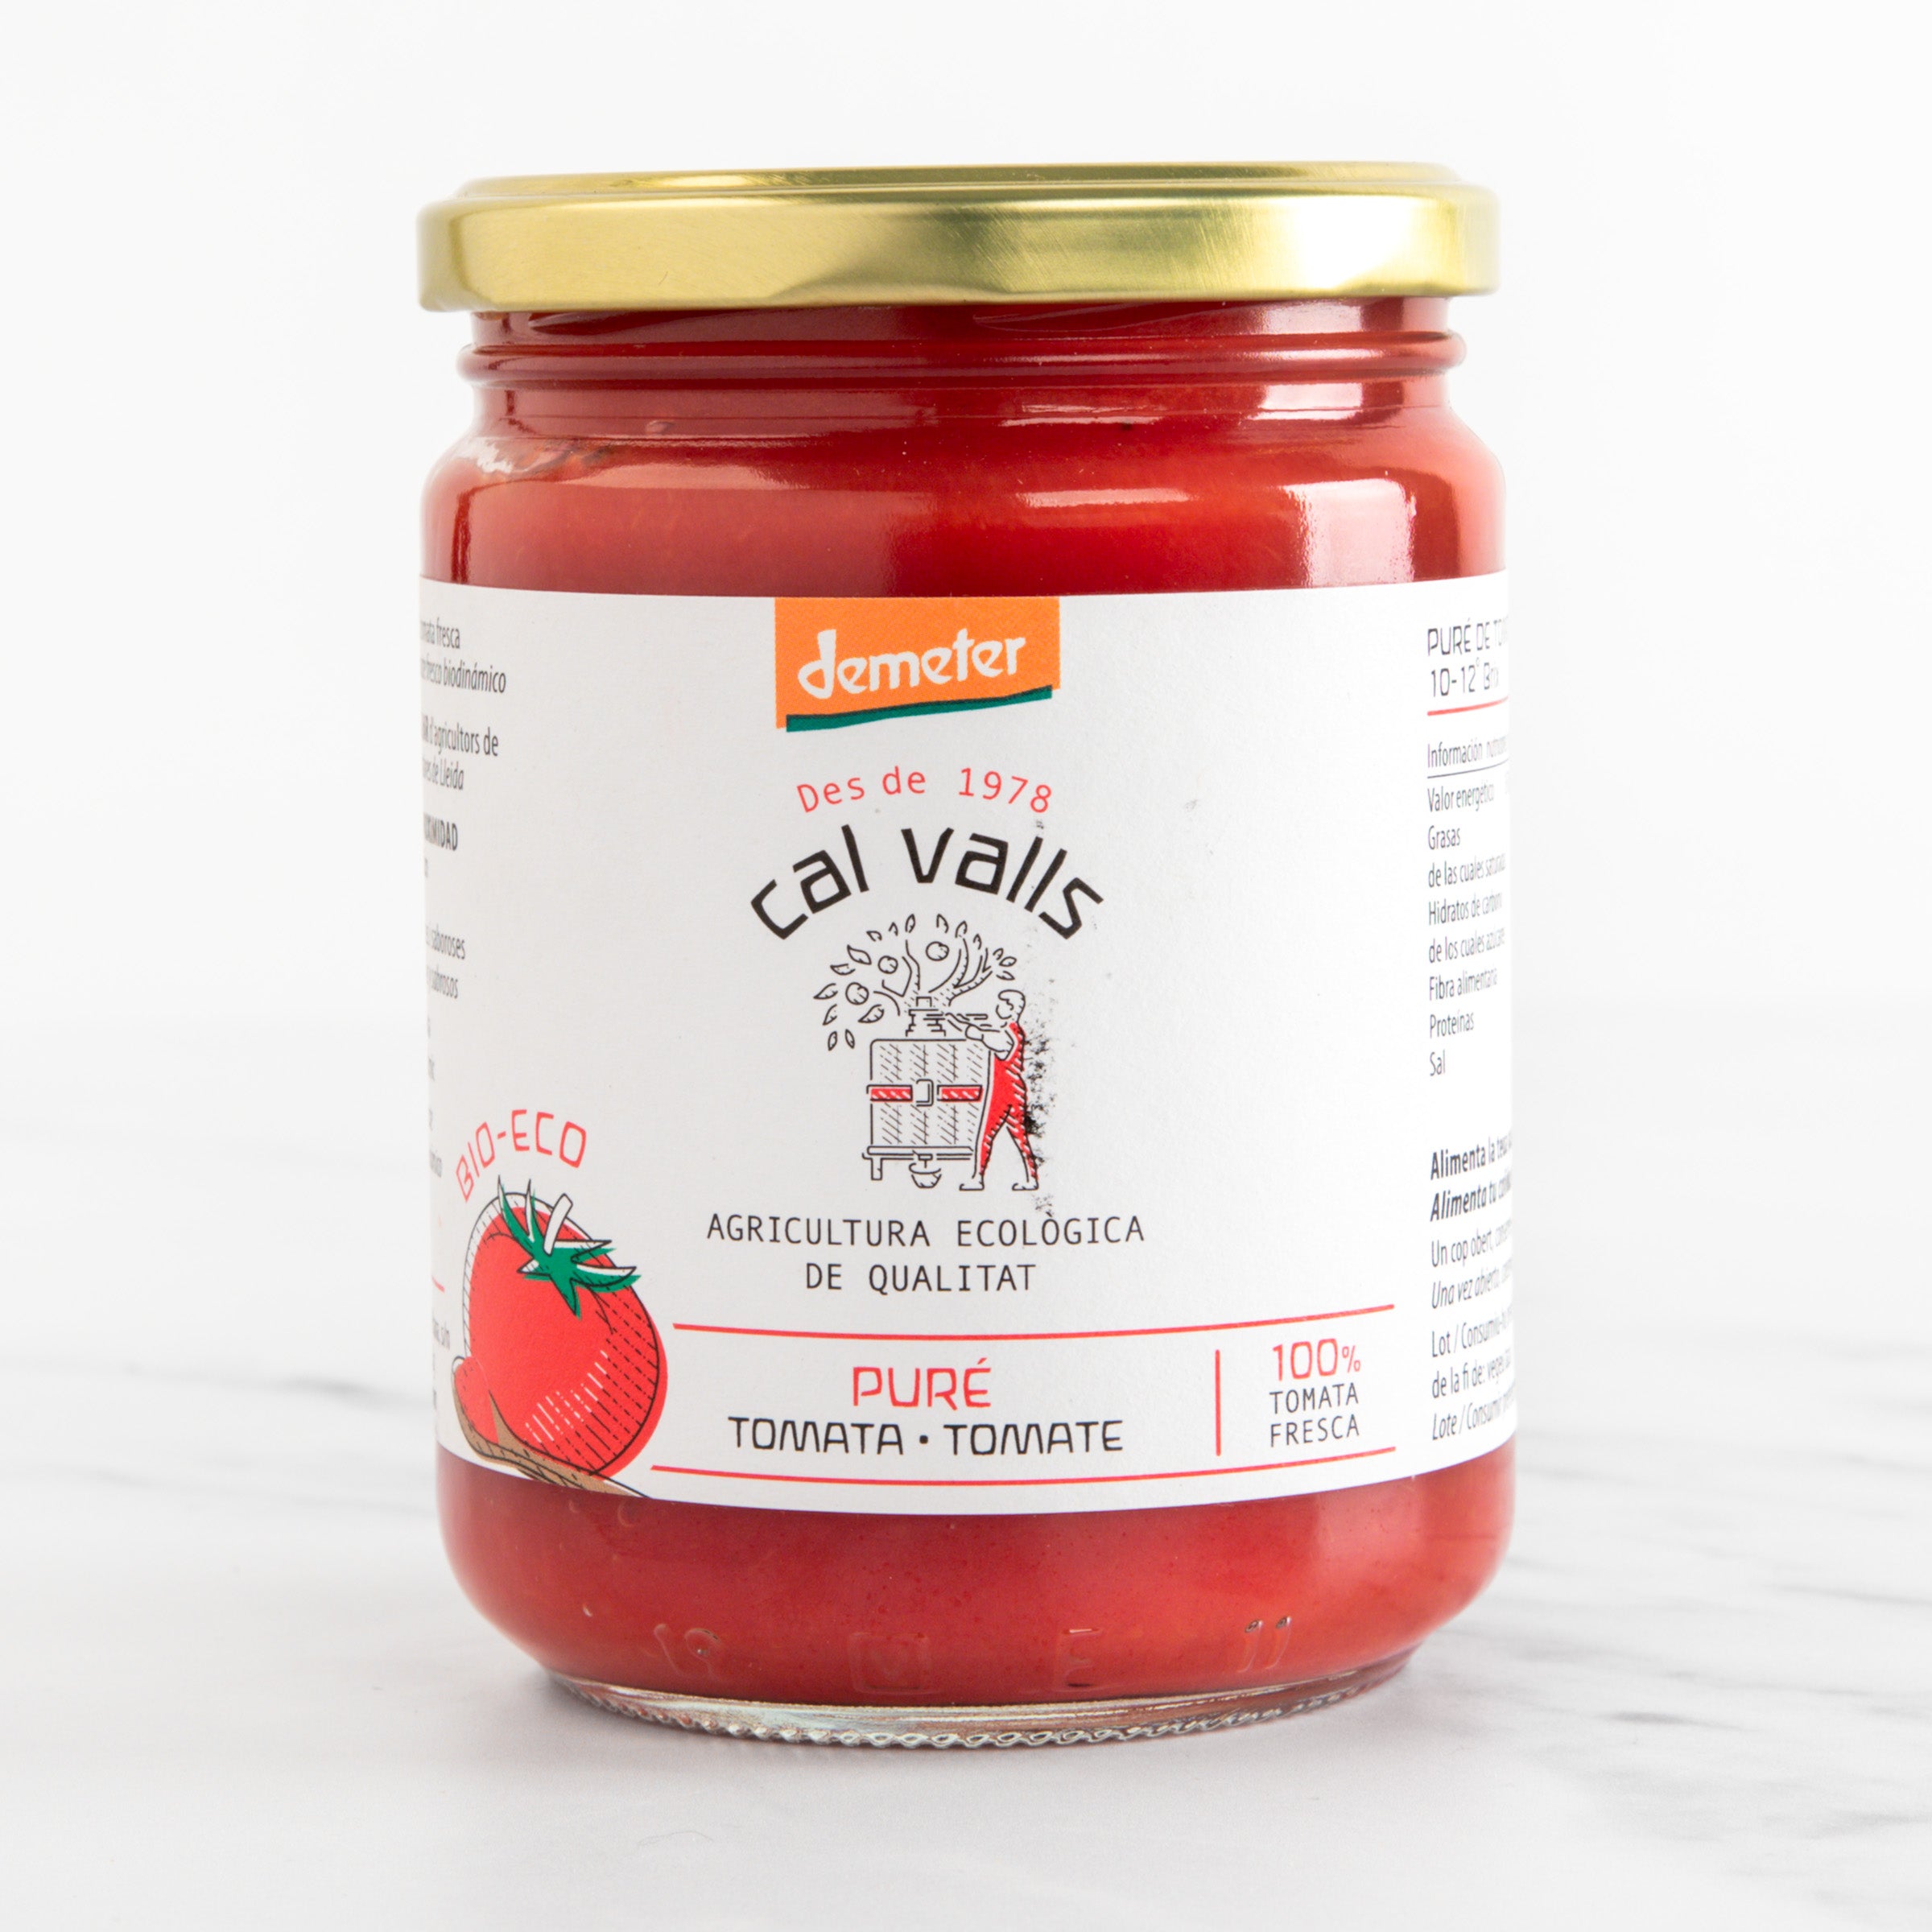 Certified Organic Tomato Puree